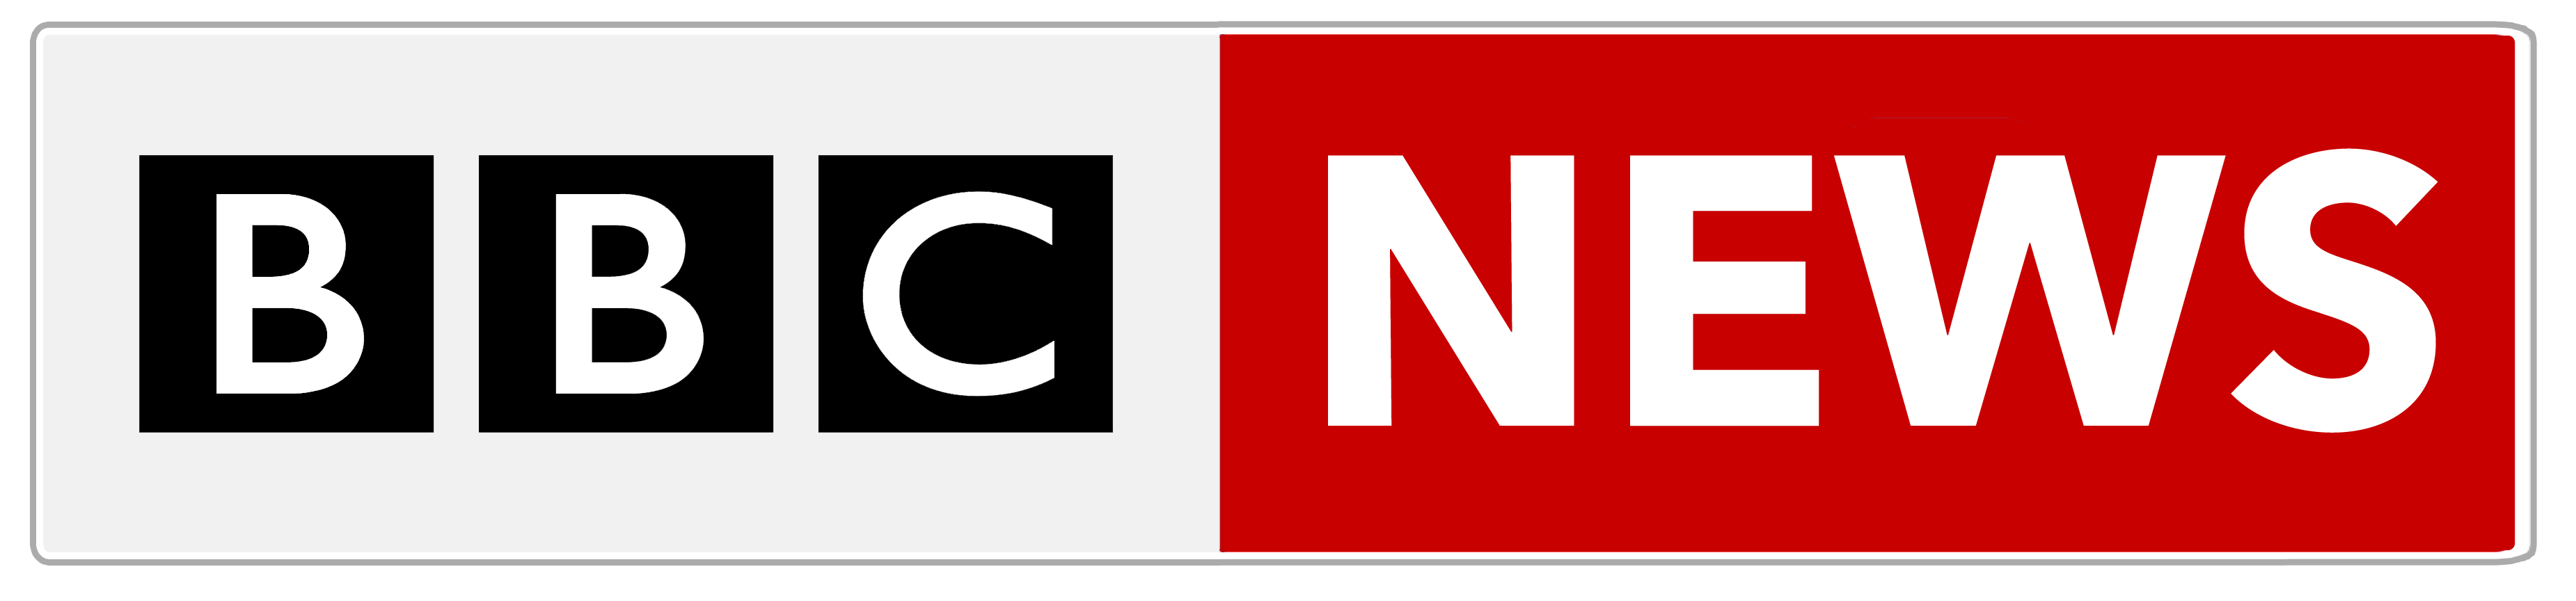 BBC News Logo - Bbc news 24 Logos